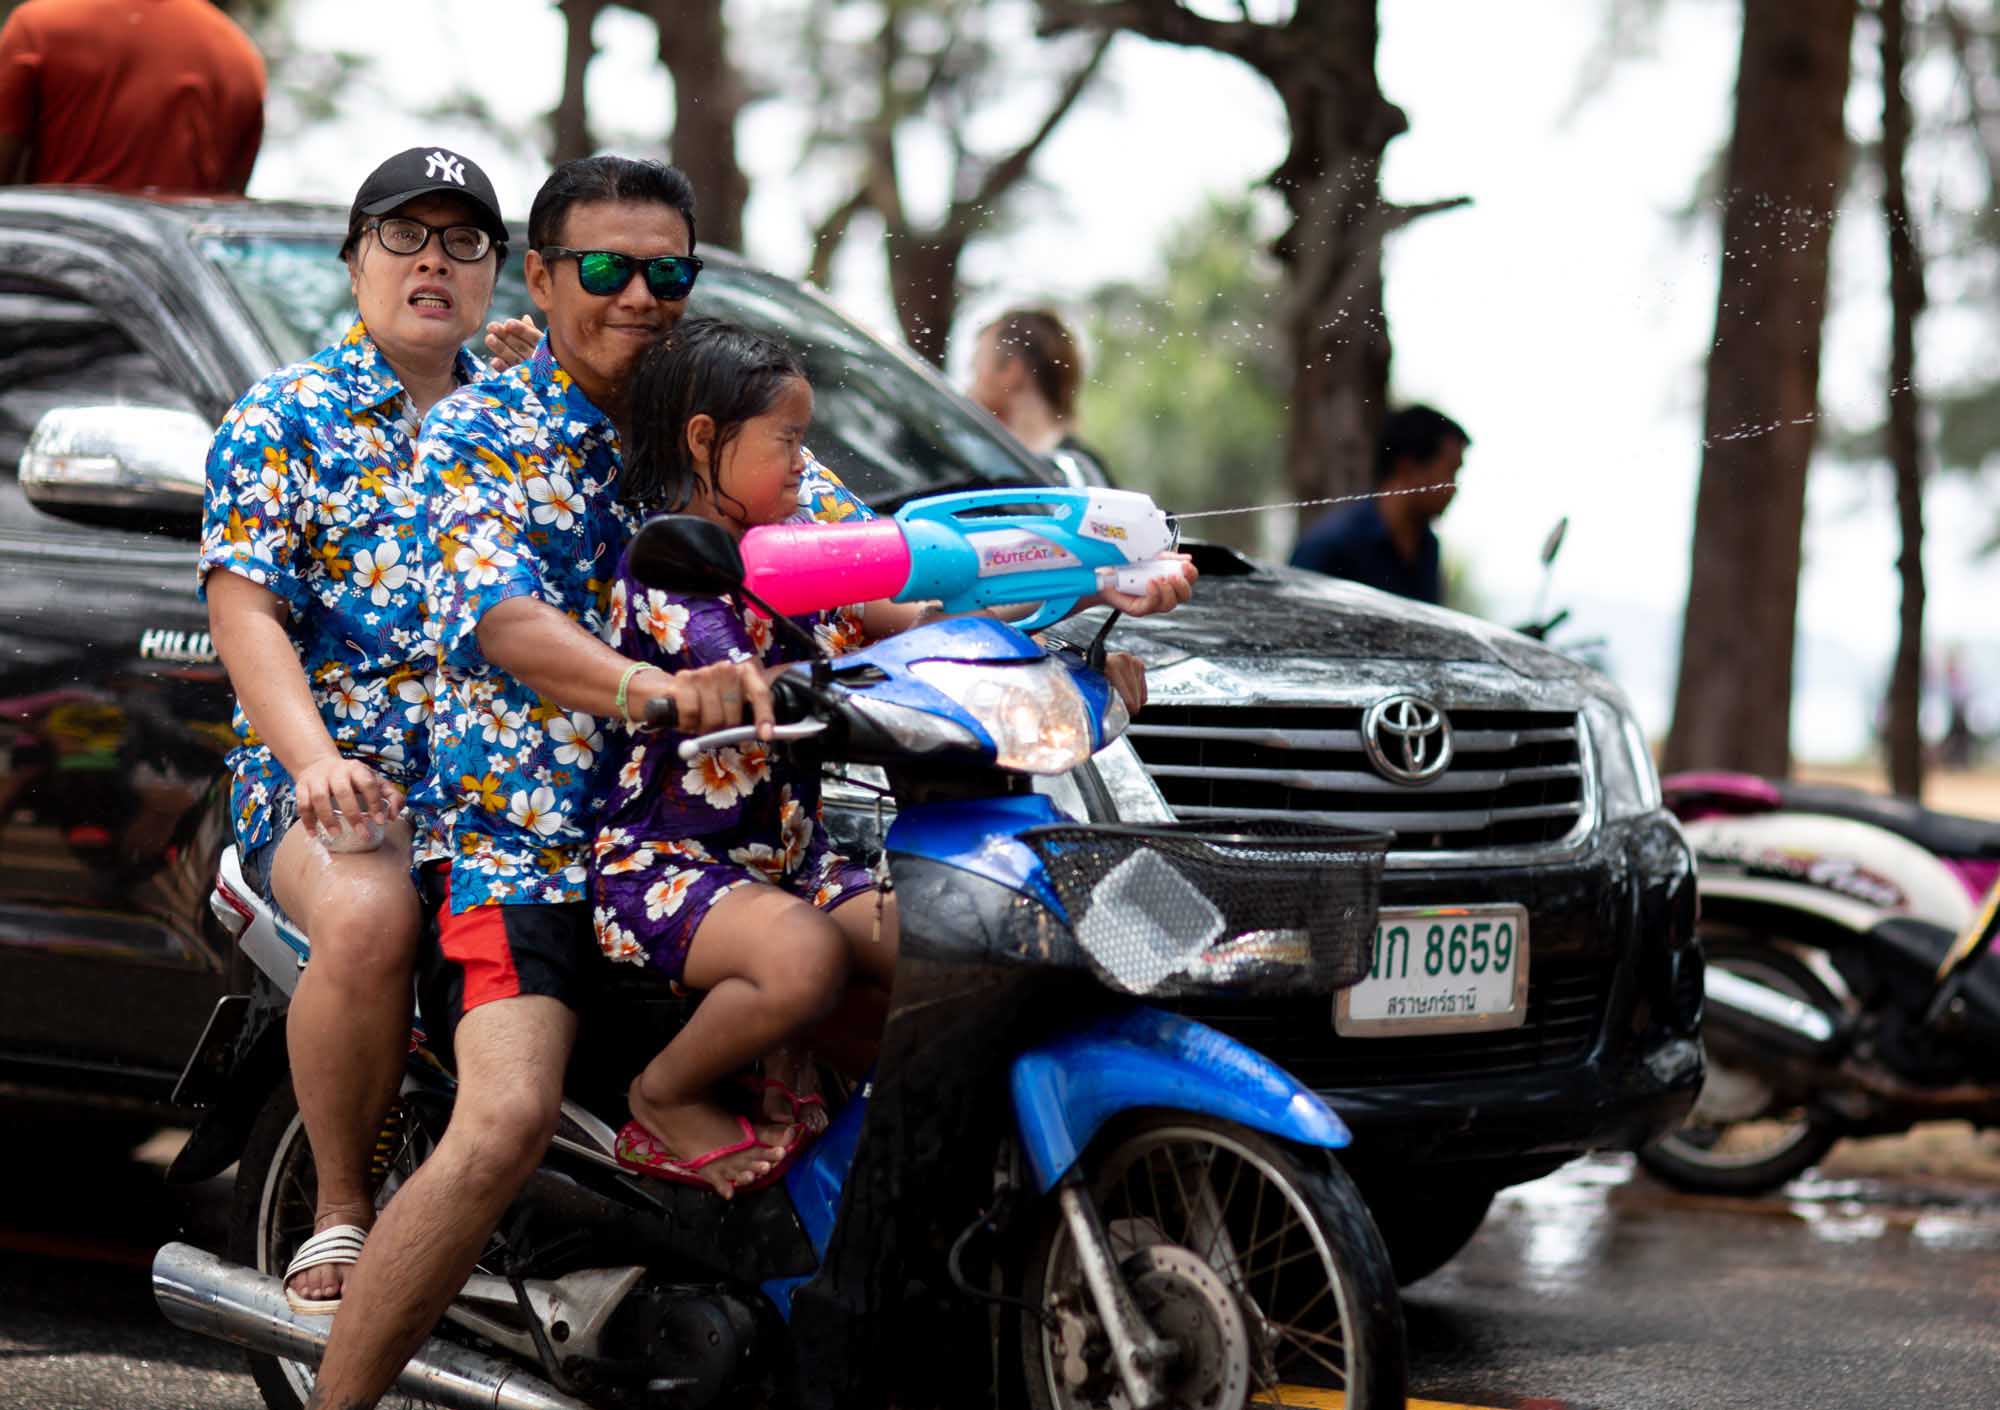 Little girl shoots squirt gun on motorbike during Songkran water festival in Phuket, Thailand